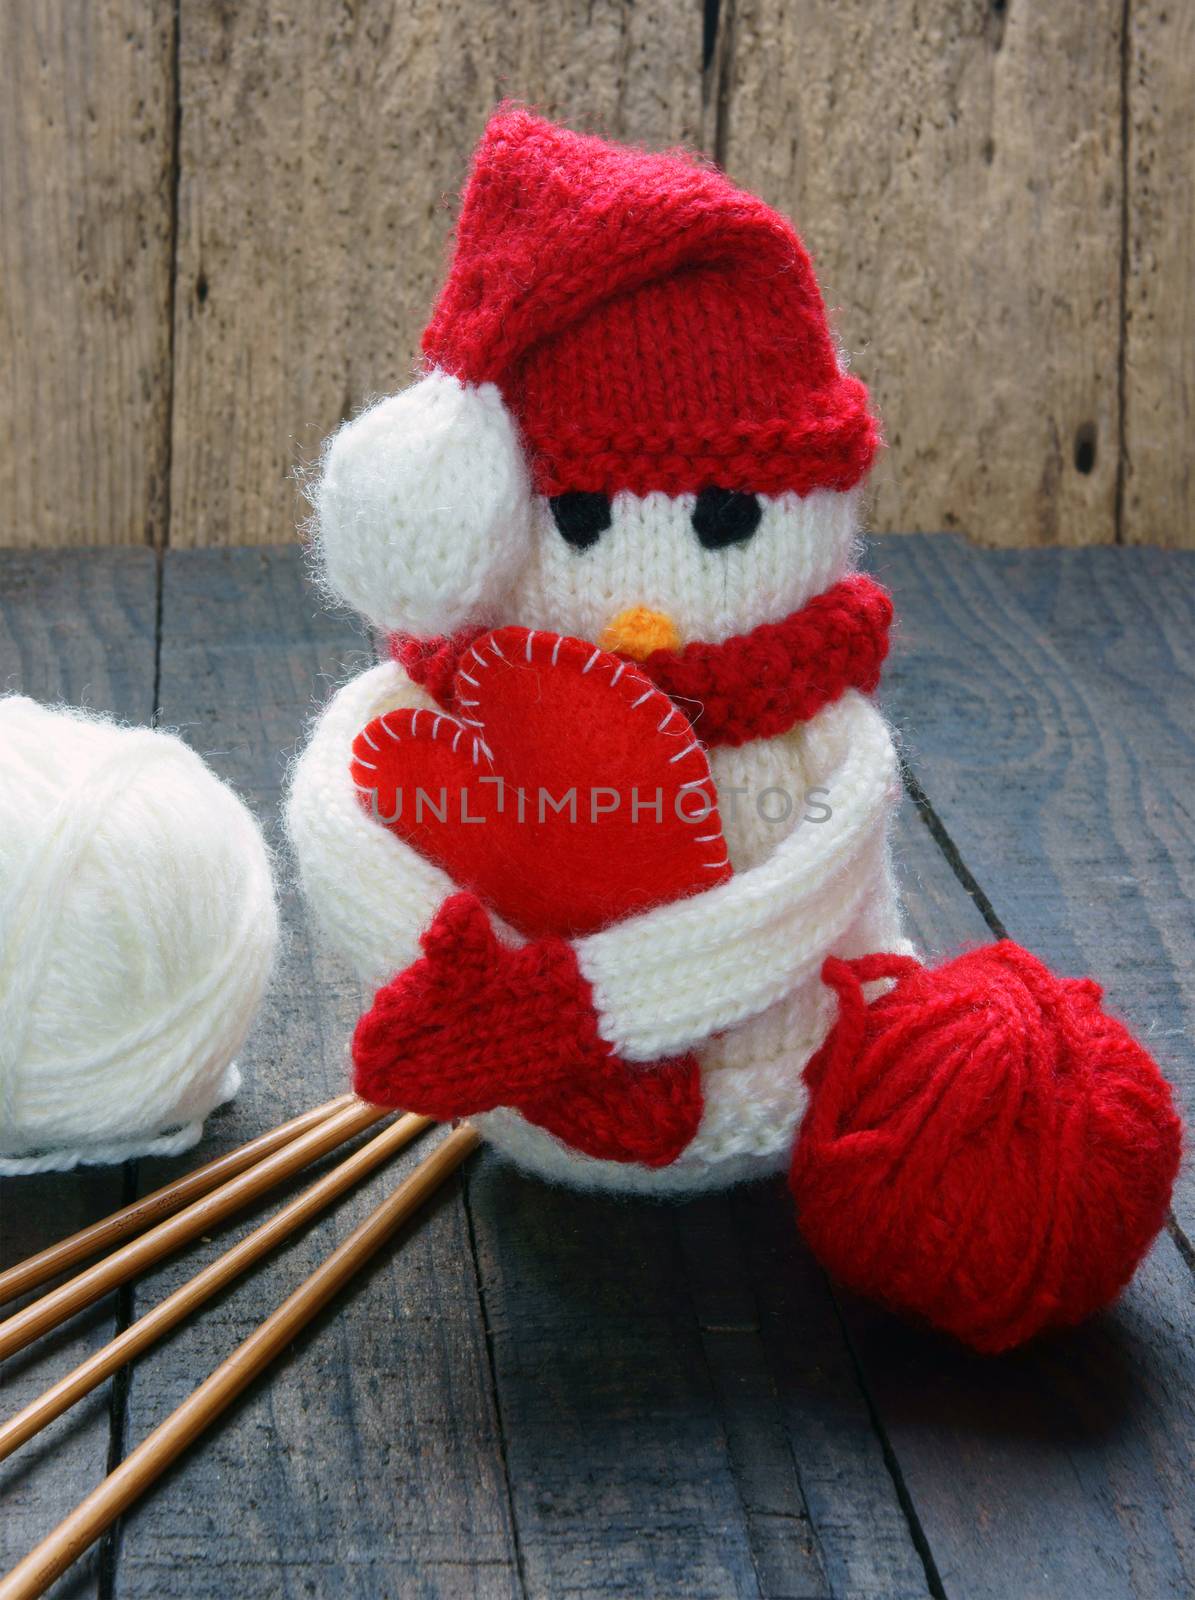 Xmas ornament, handmade, christmas, snowman by xuanhuongho